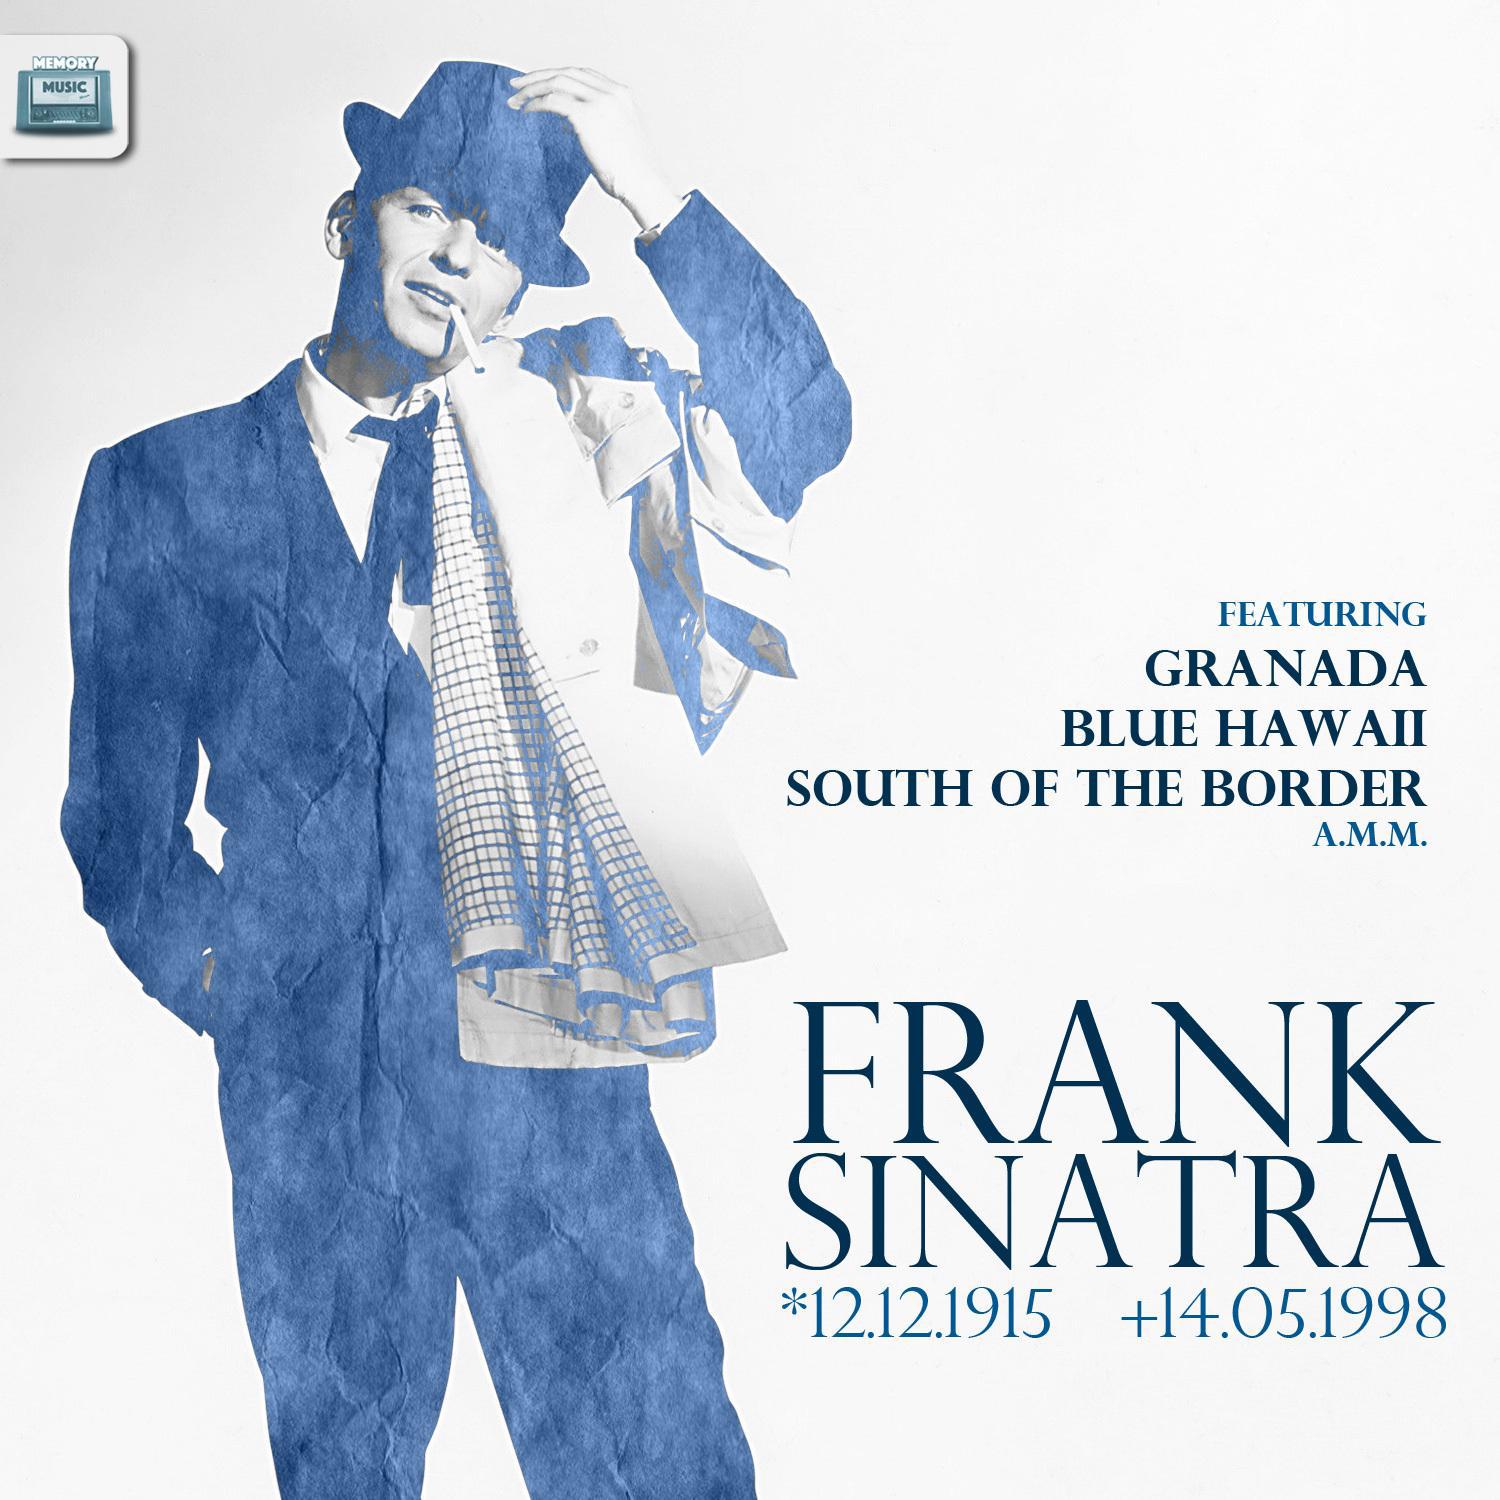 Frank Sinatra - *12.12.1915 - + 14.05.1998